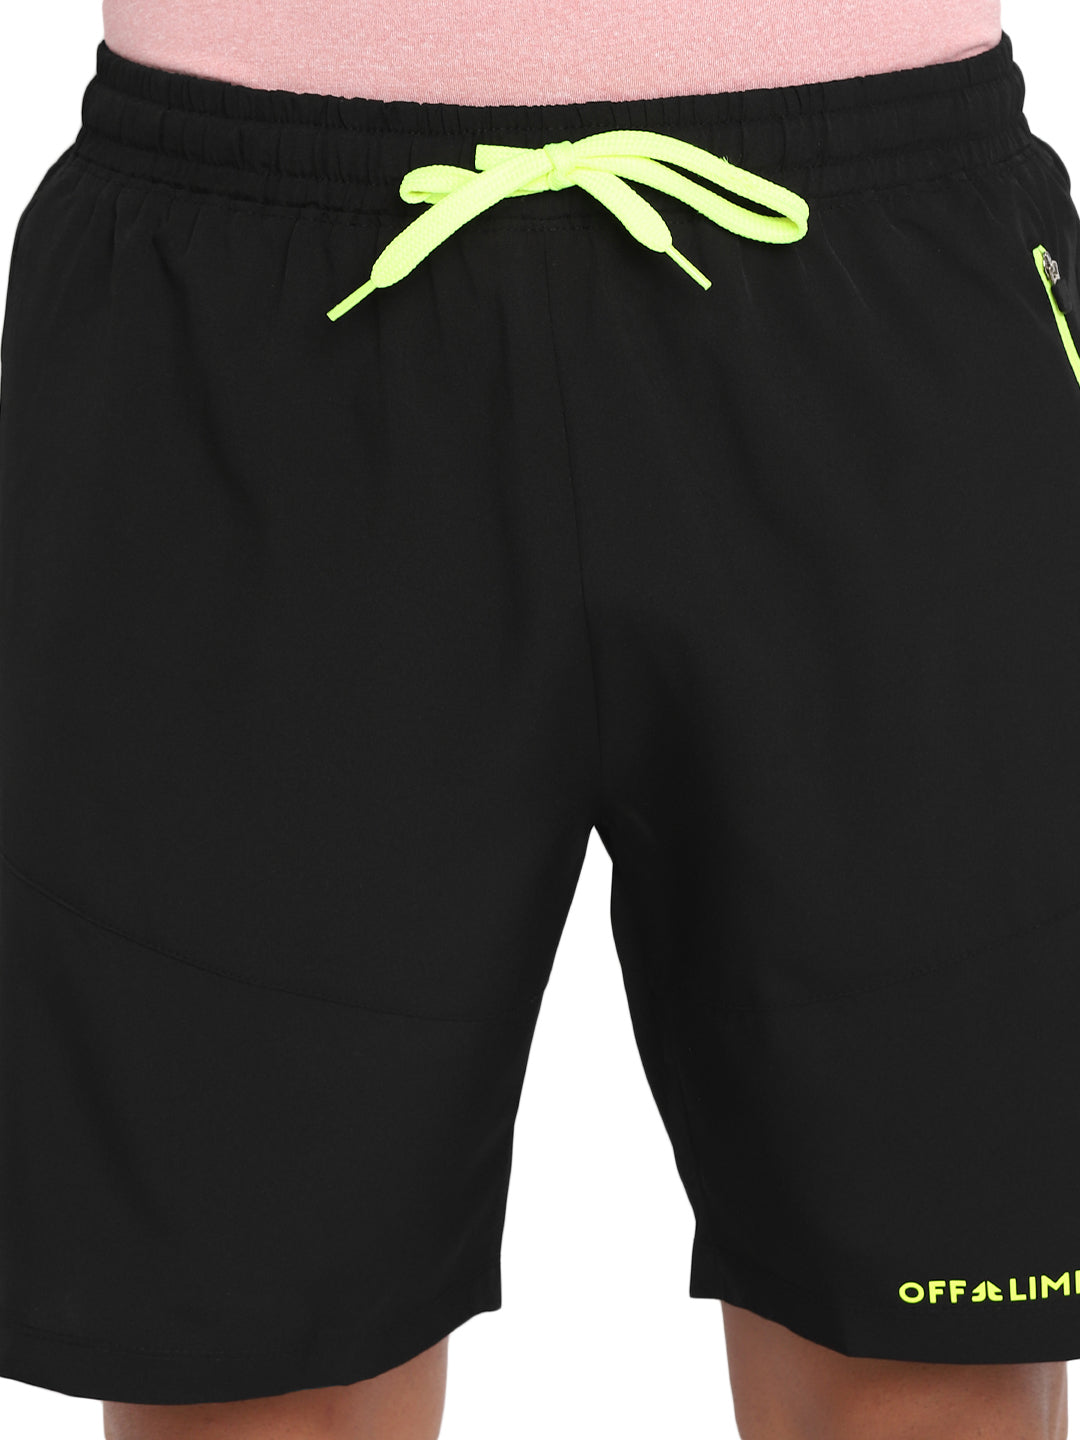 Men sports short swith neon zipper and tape Men Shorts